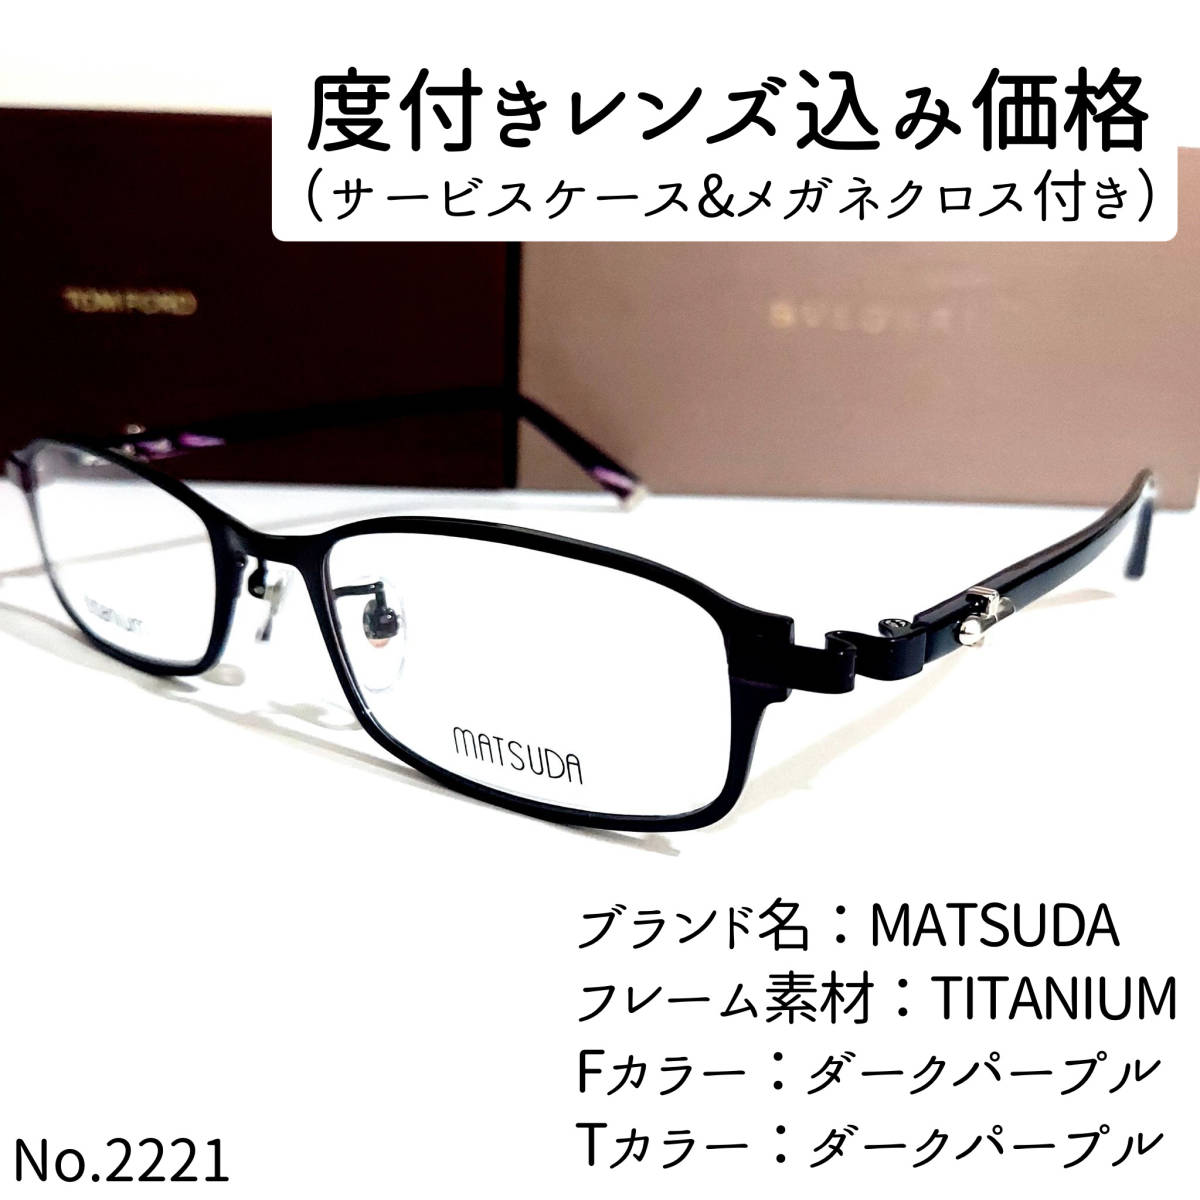 No.2221-メガネ MATSUDA【フレームのみ価格】-